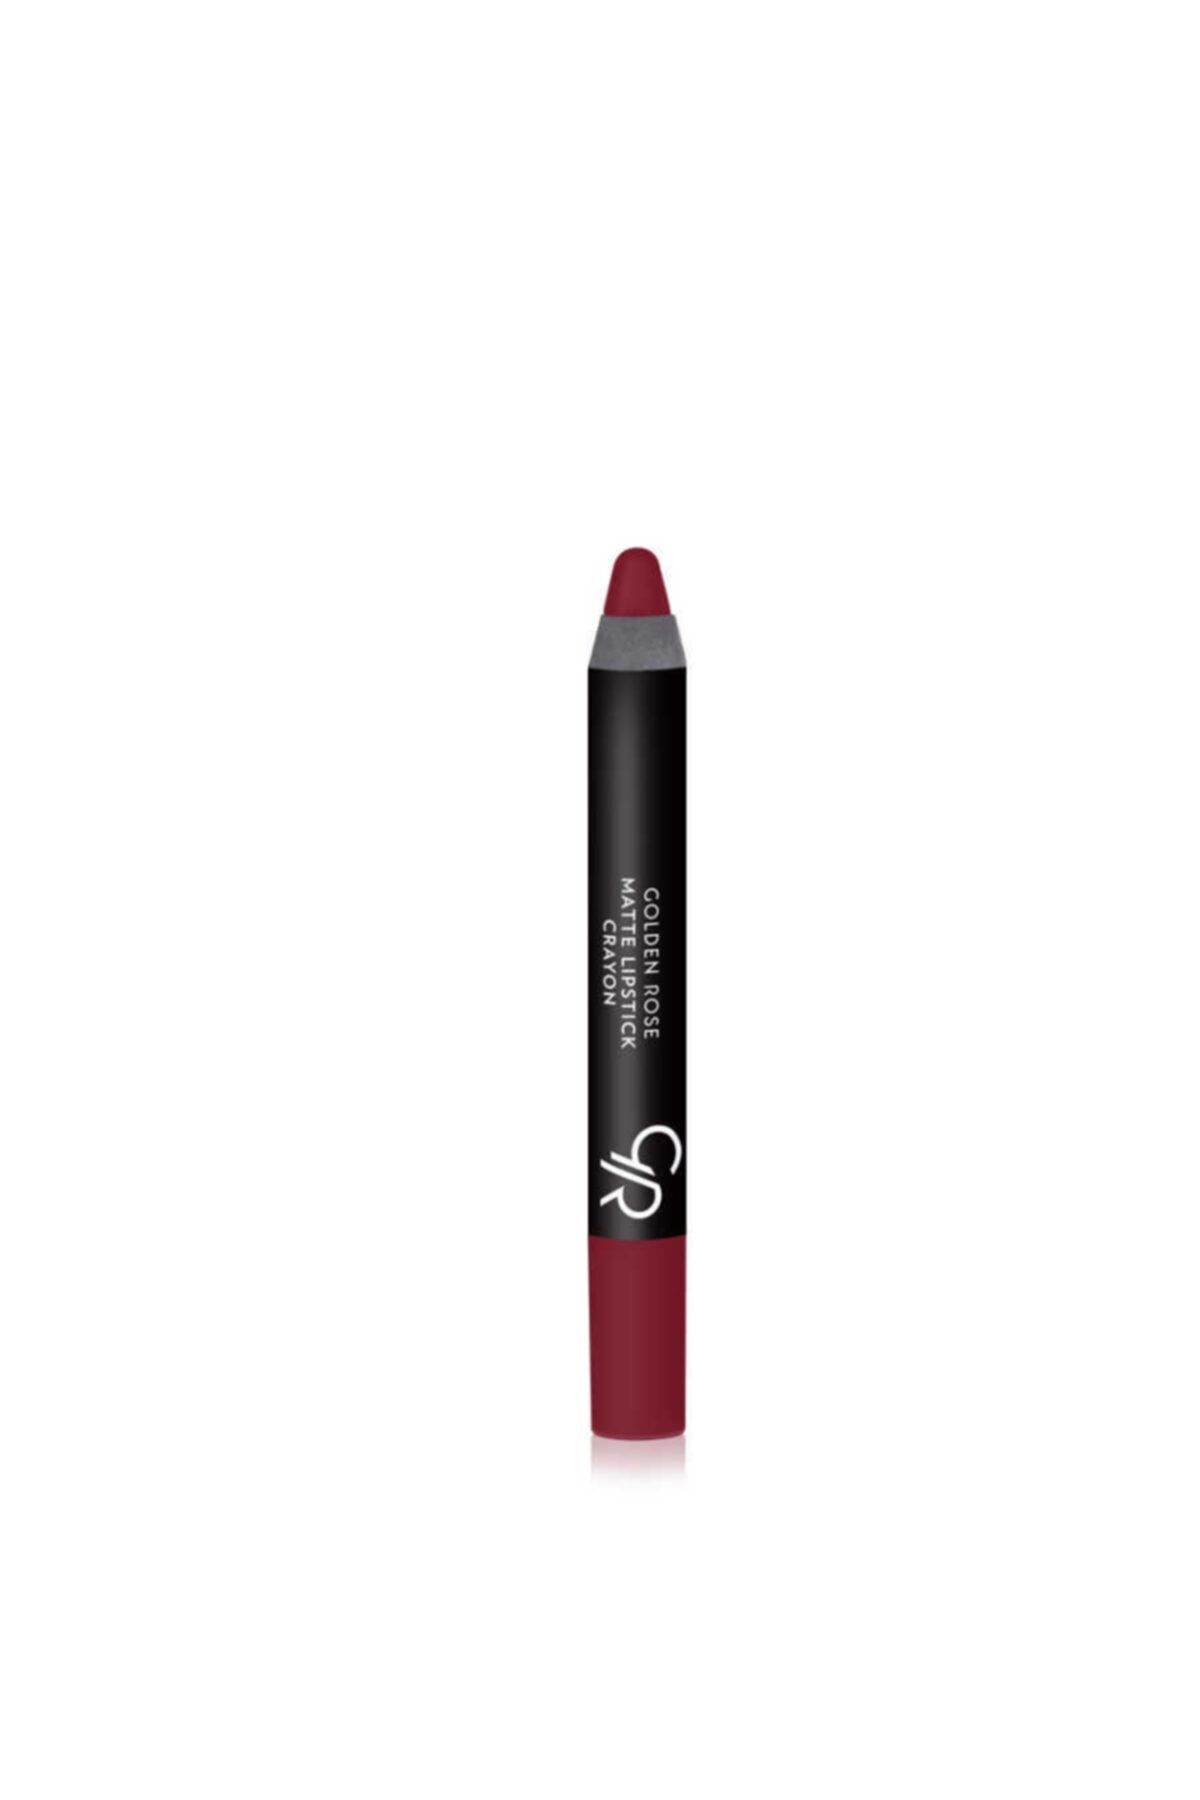 Golden Rose Matte Lipstick Crayon Ruj No: 05